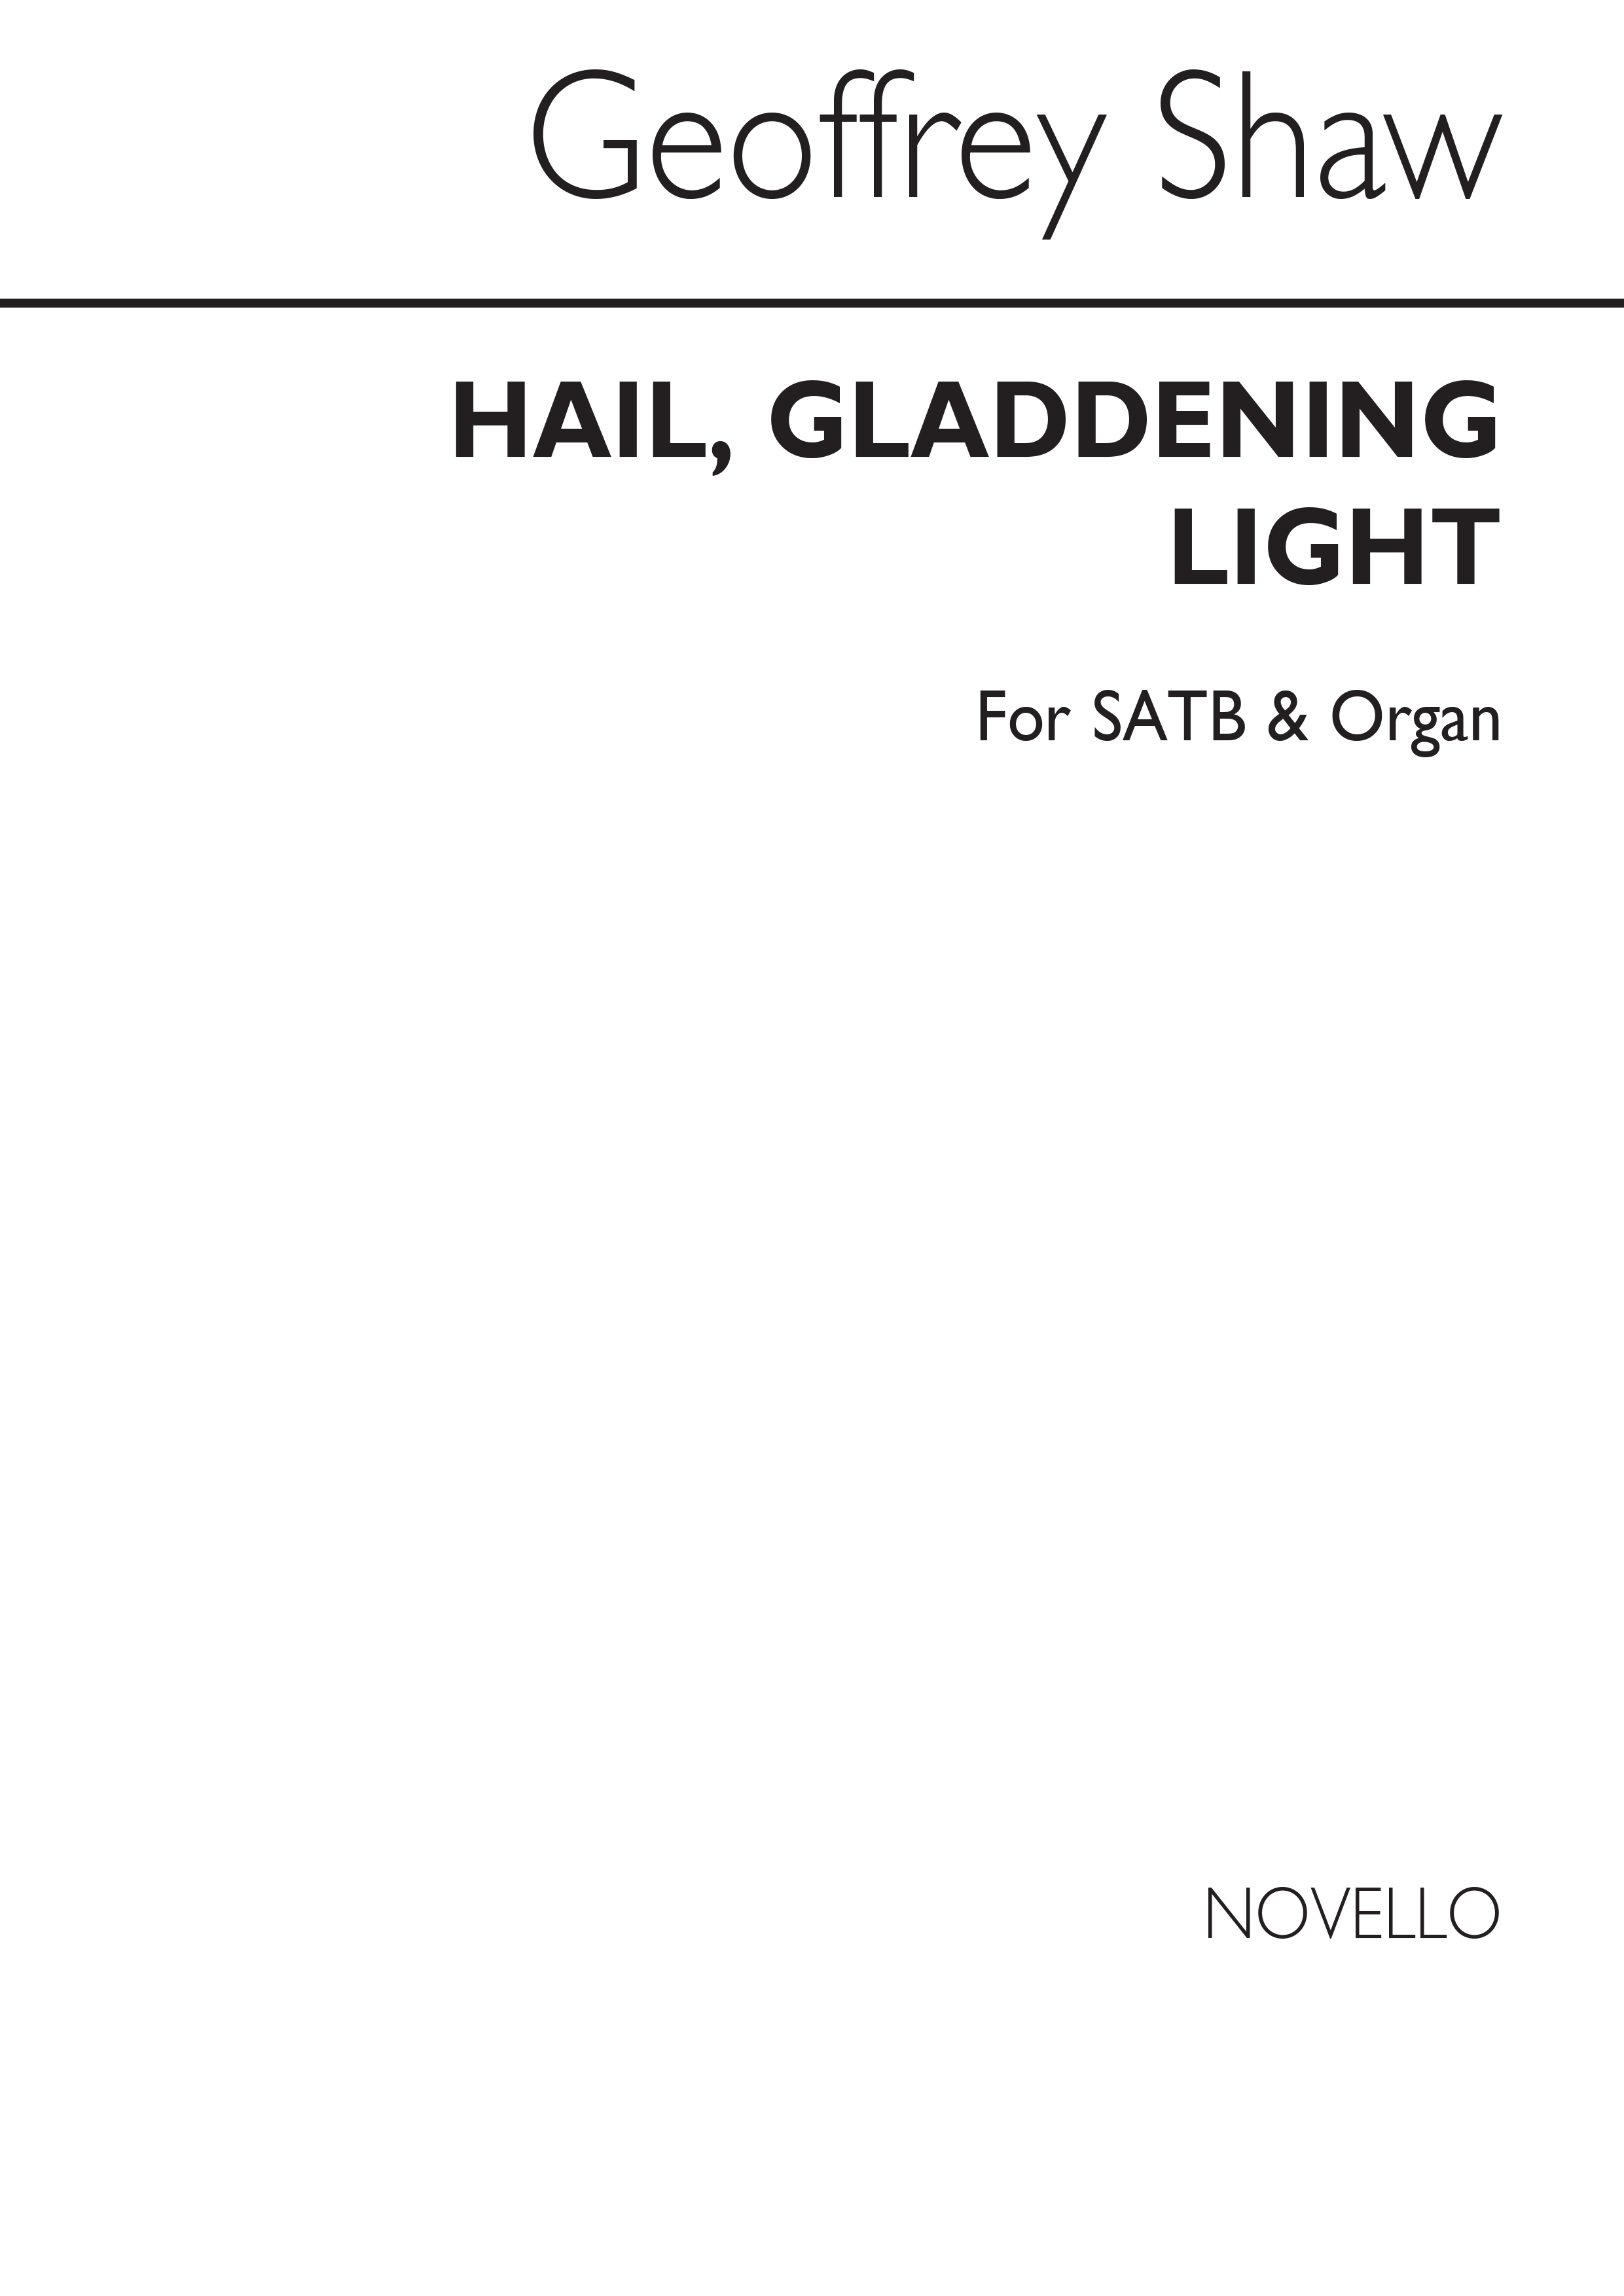 Geoffrey Shaw: Hail Gladdening Light